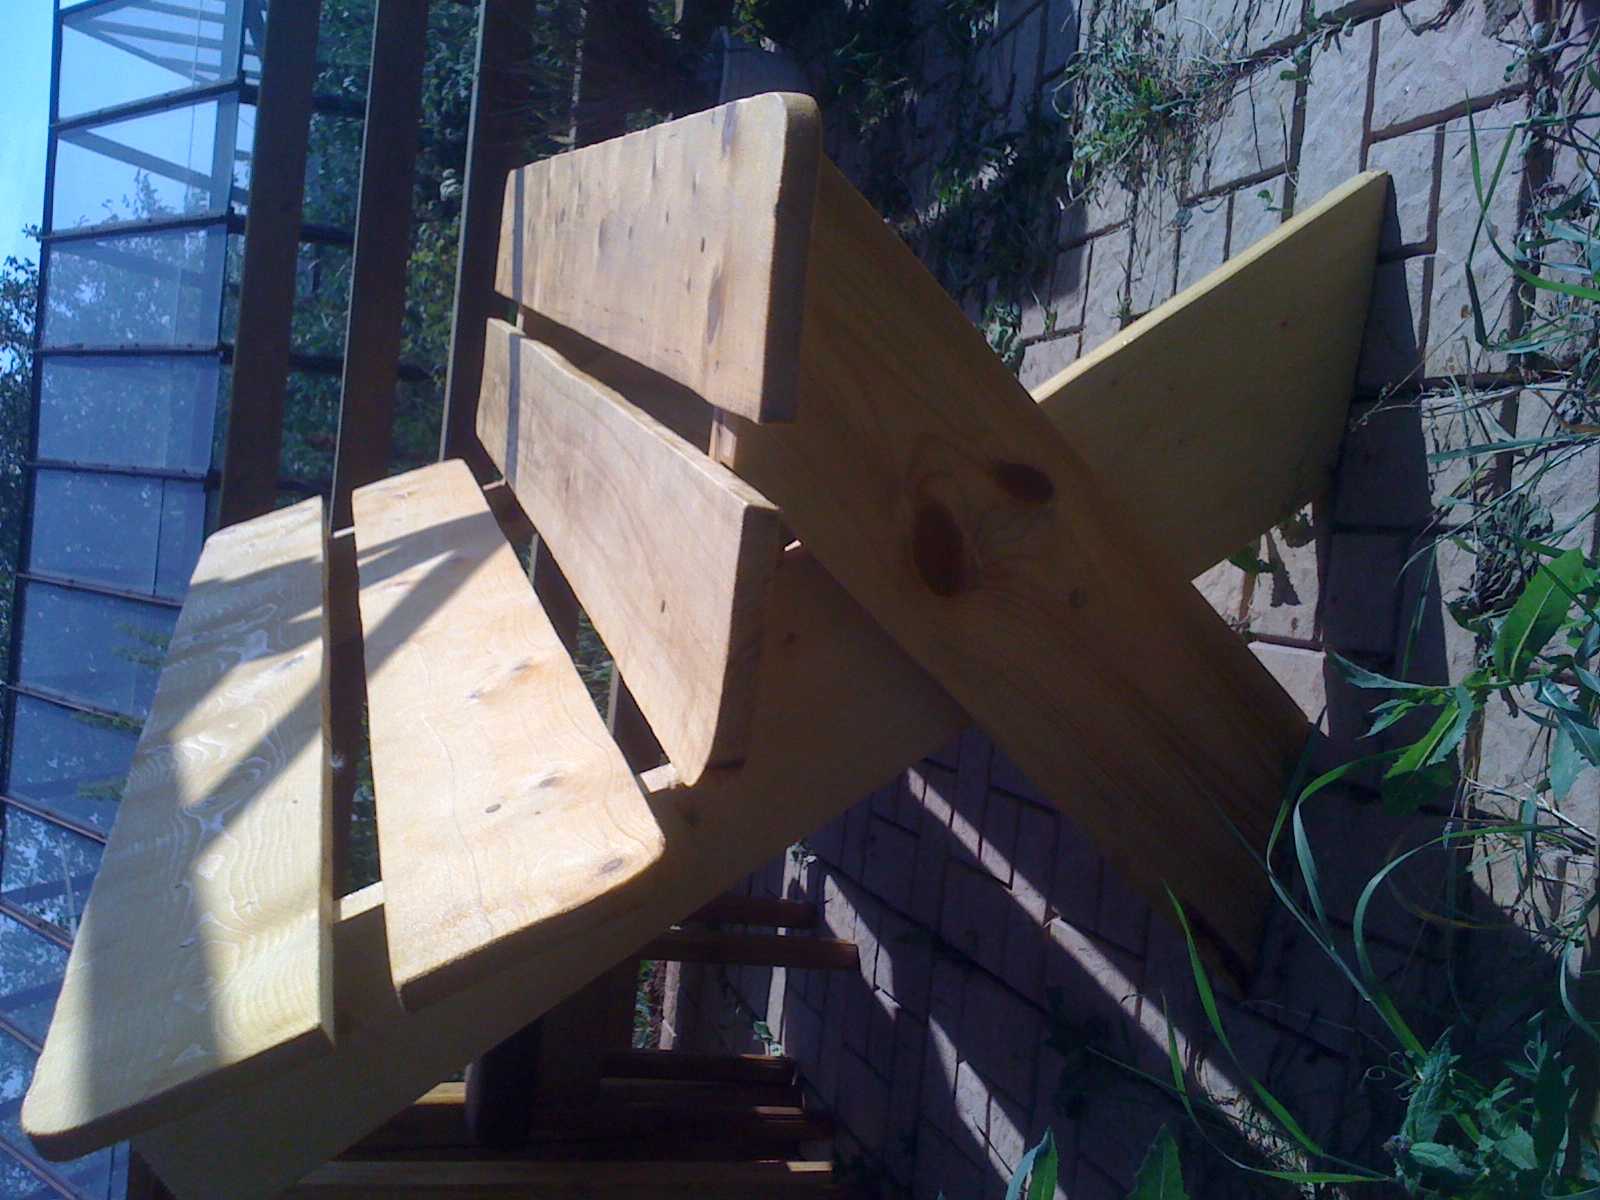 скамейка своими руками из дерева со спинкой на даче